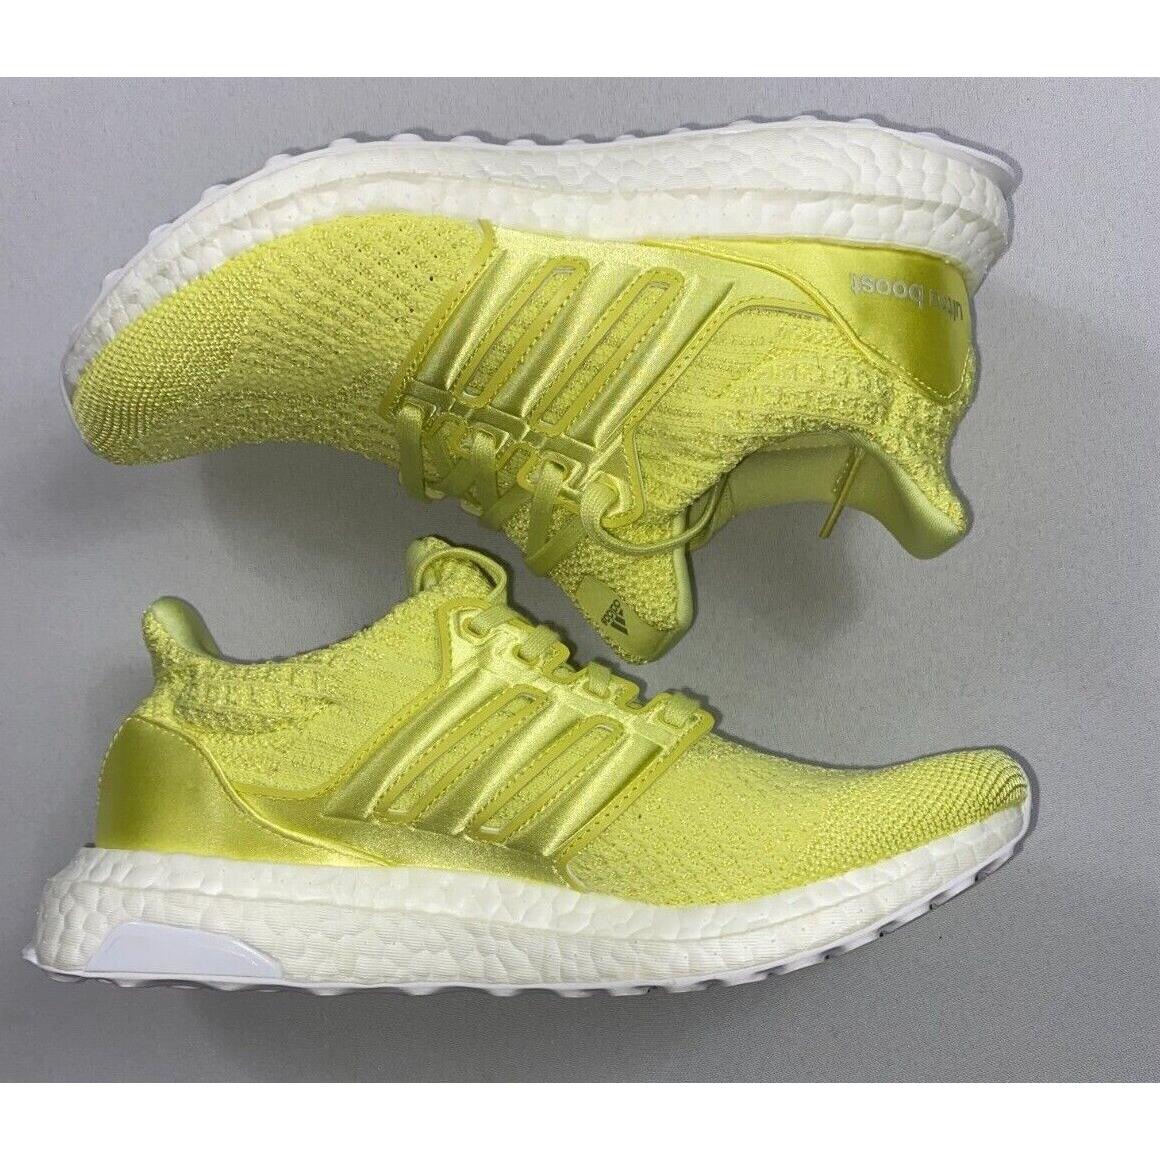 Adidas shoes UltraBoost - Green 2